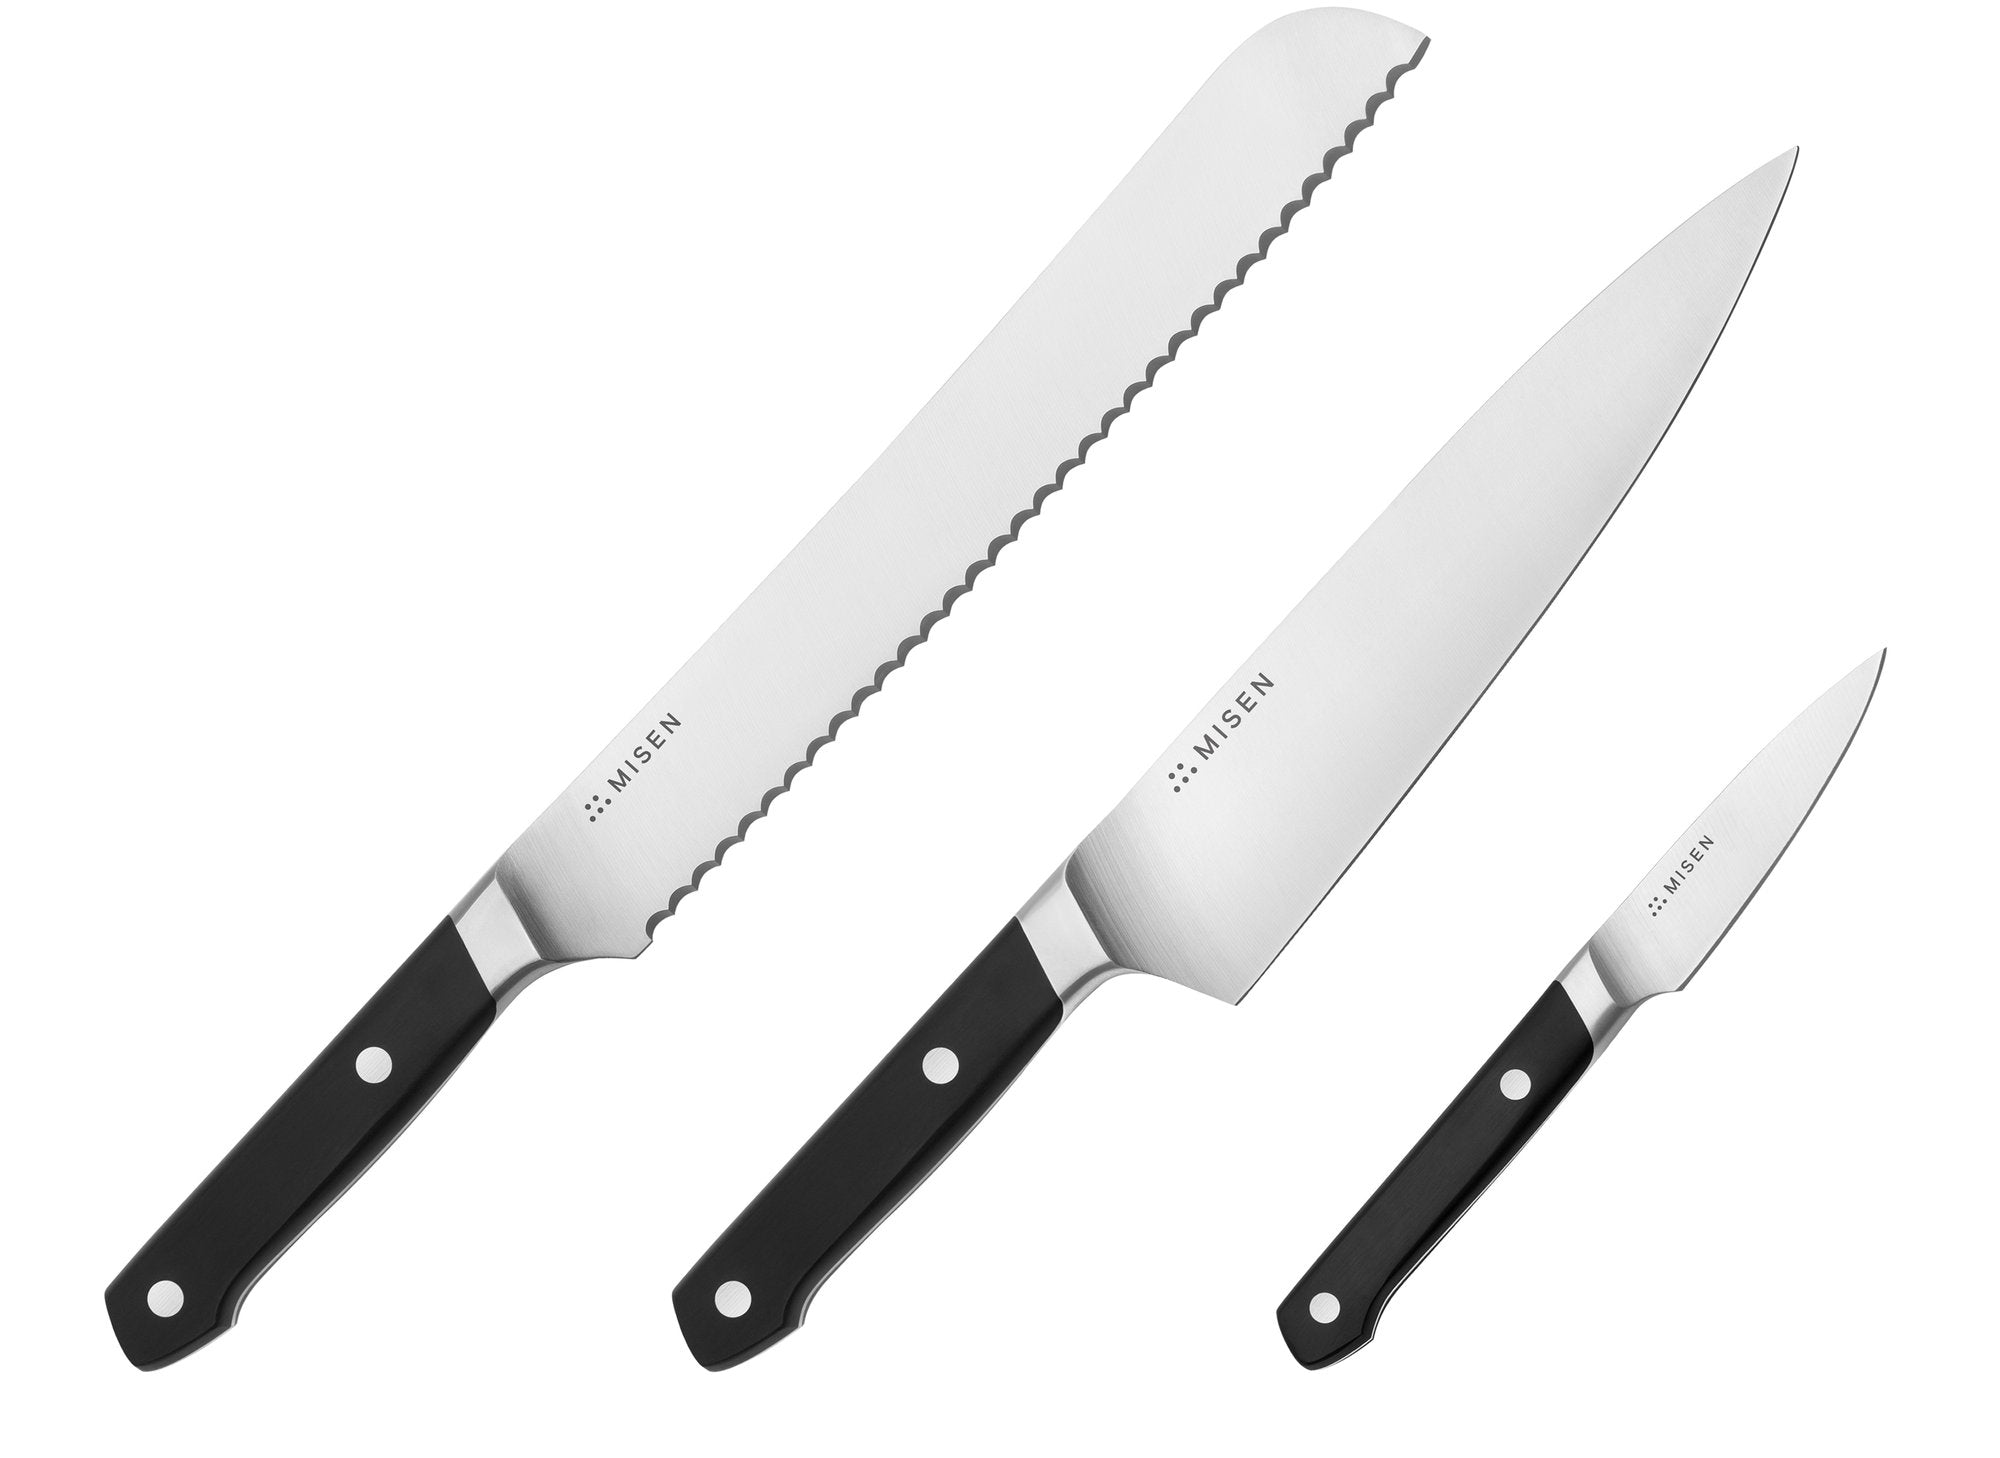 The Misen essentials professional knife set